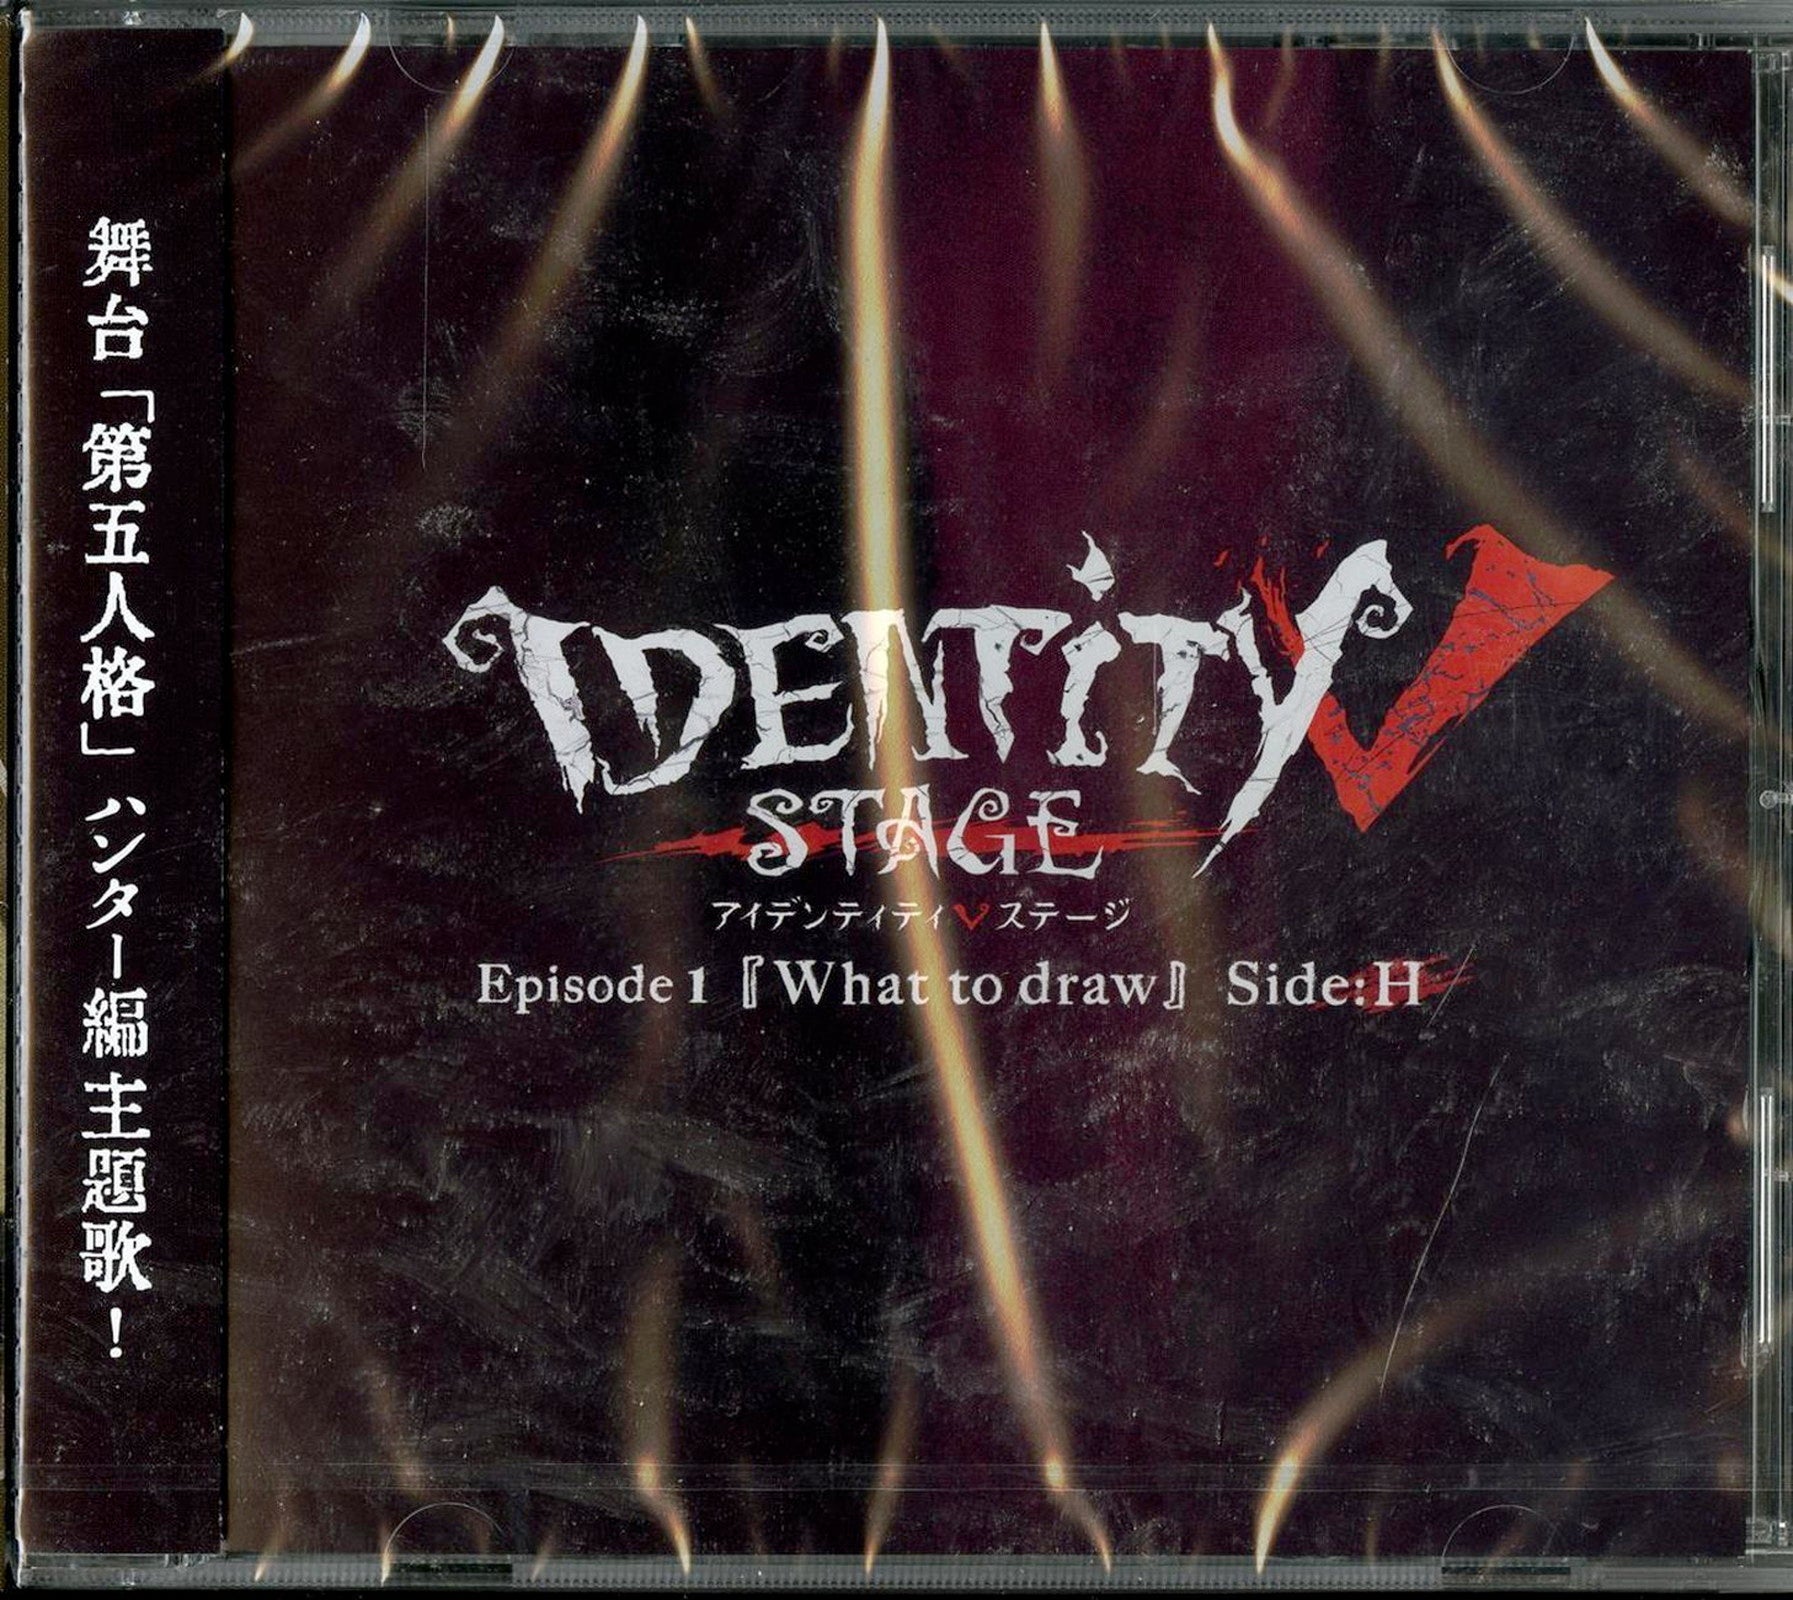 Identity V Stage - Identity V Stage Hunter Hen. Destiny - Japan CD